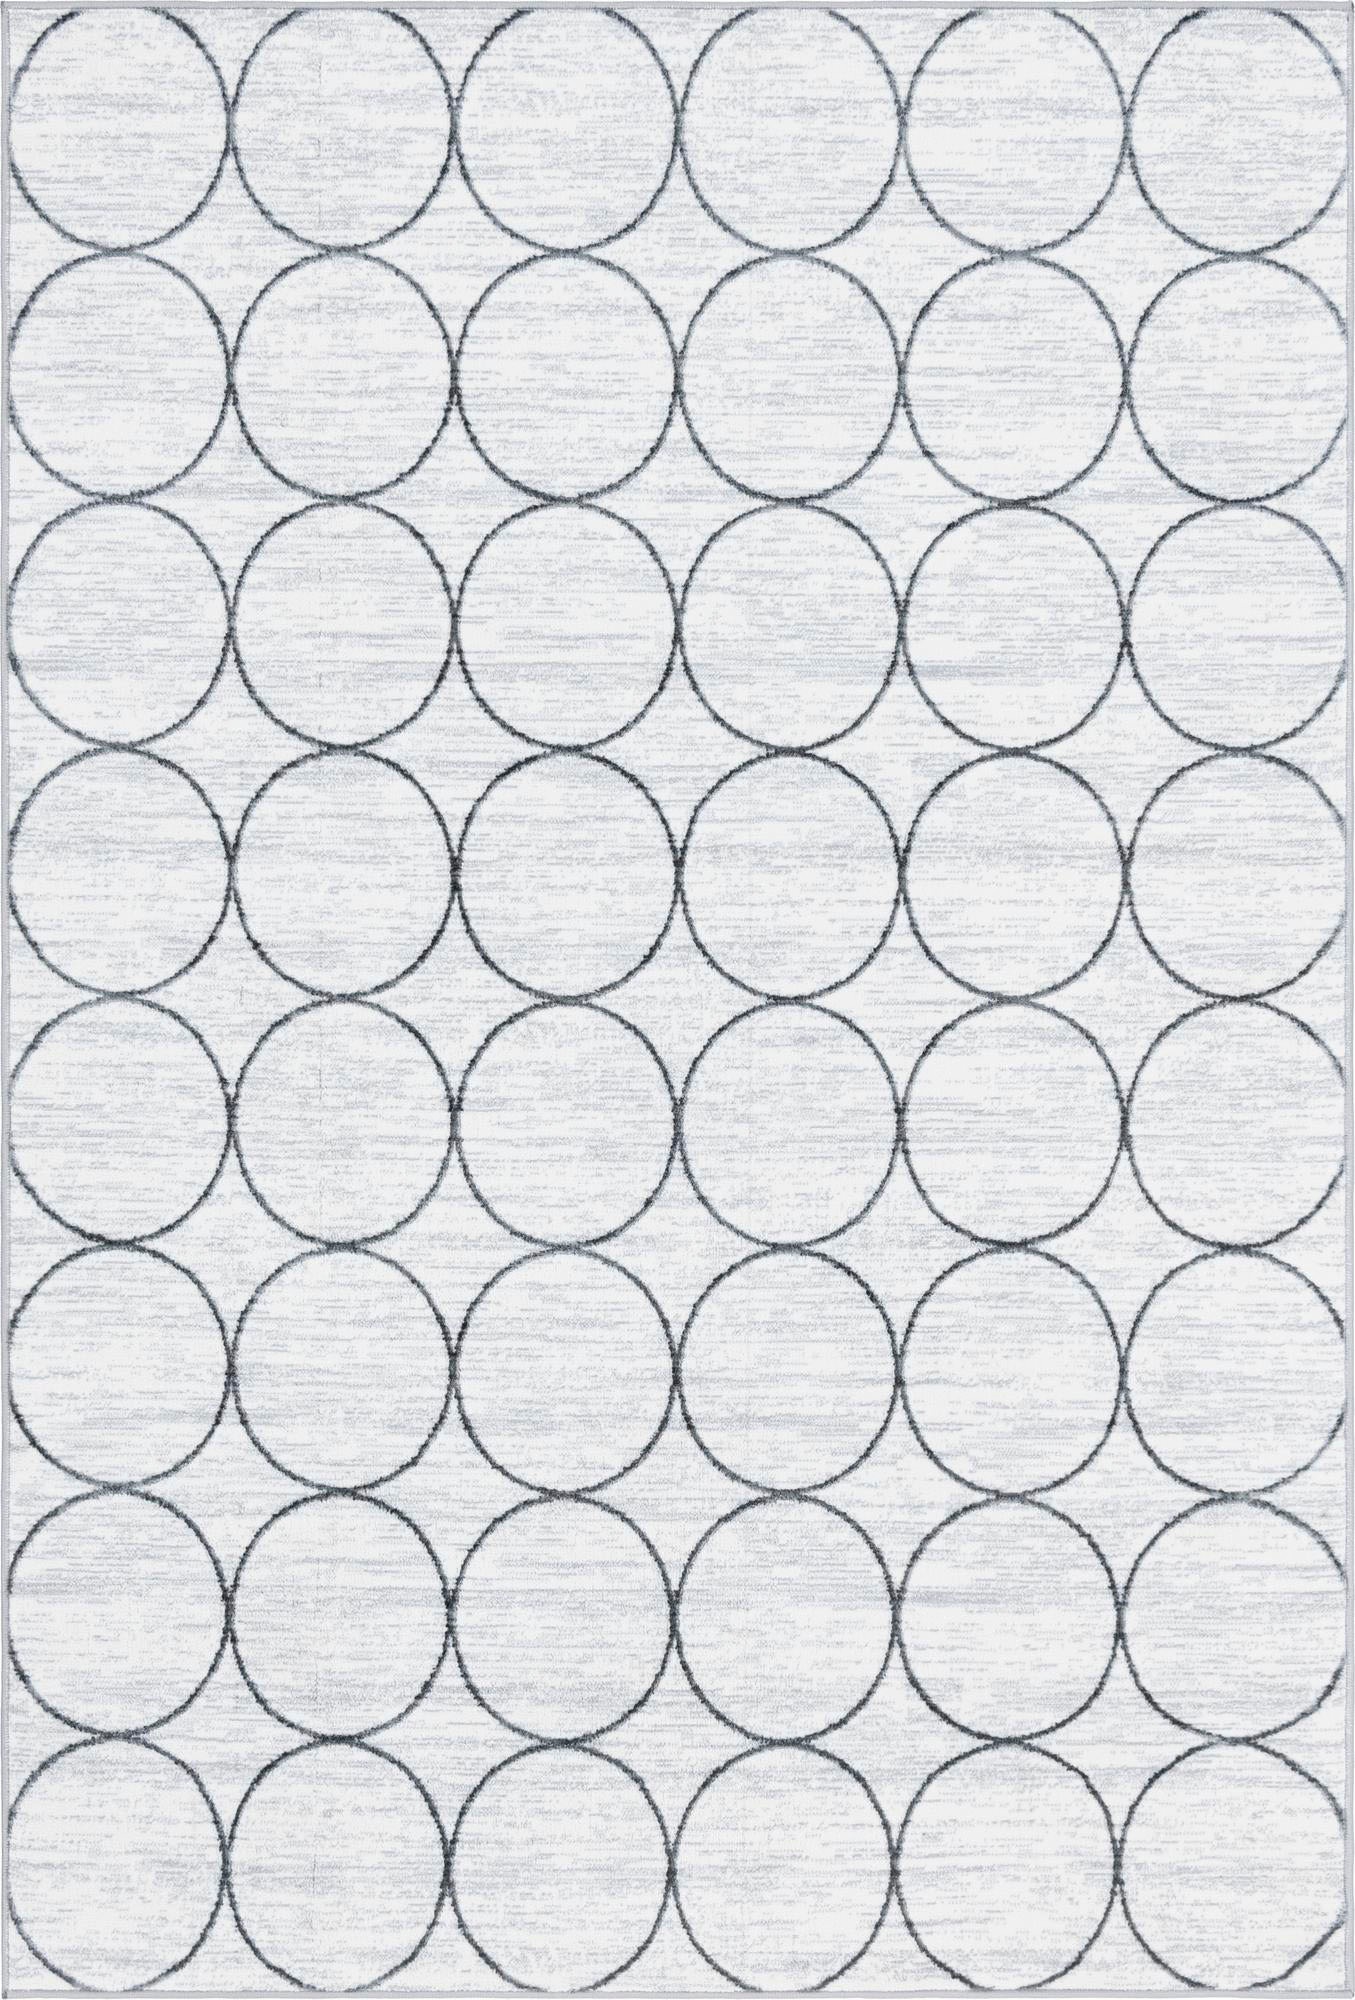 Myflair Möbel & Accessoires Teppich »Titan Trellis«, rechteckig, Kurzflor, gewebt, modernes Design, Motiv Kreise